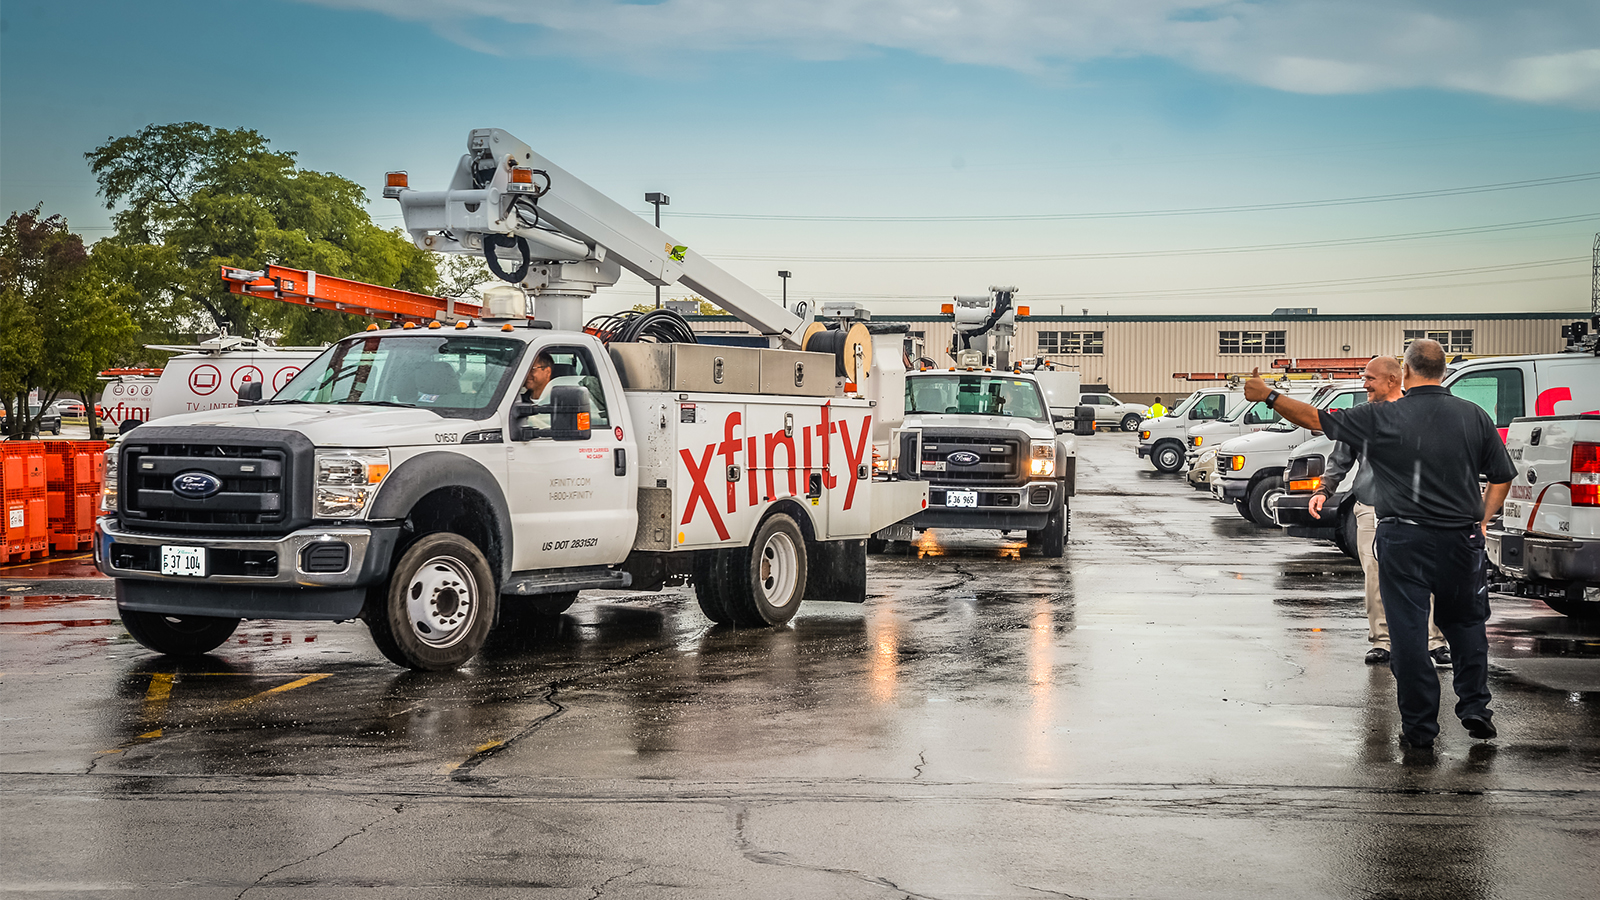 Xfinity branded truck.